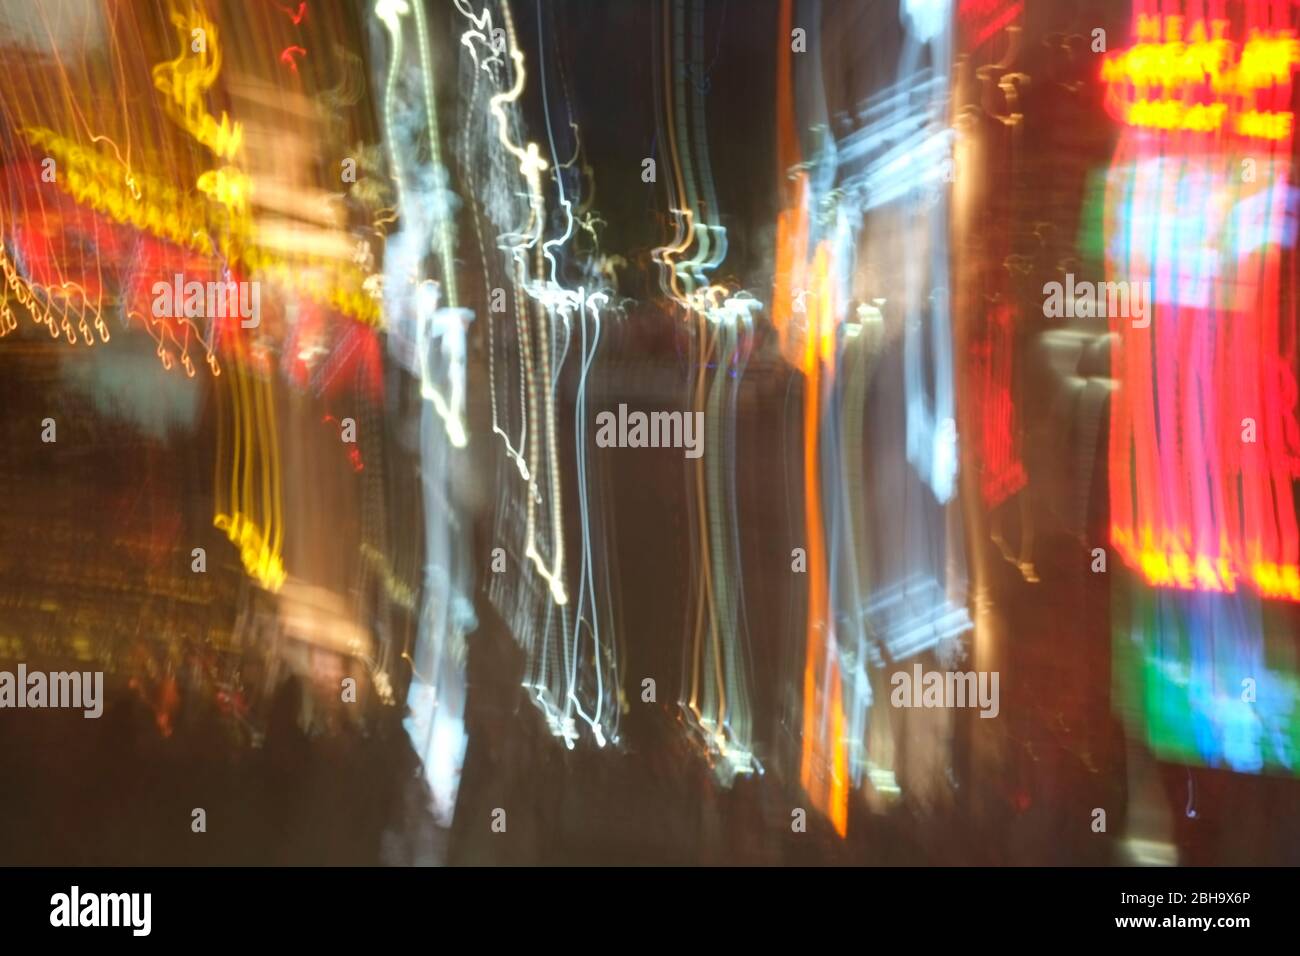 Time exposure of night club neons and illuminated bars at Avenida Cinquo in Playa del Carmen Mexico Stock Photo